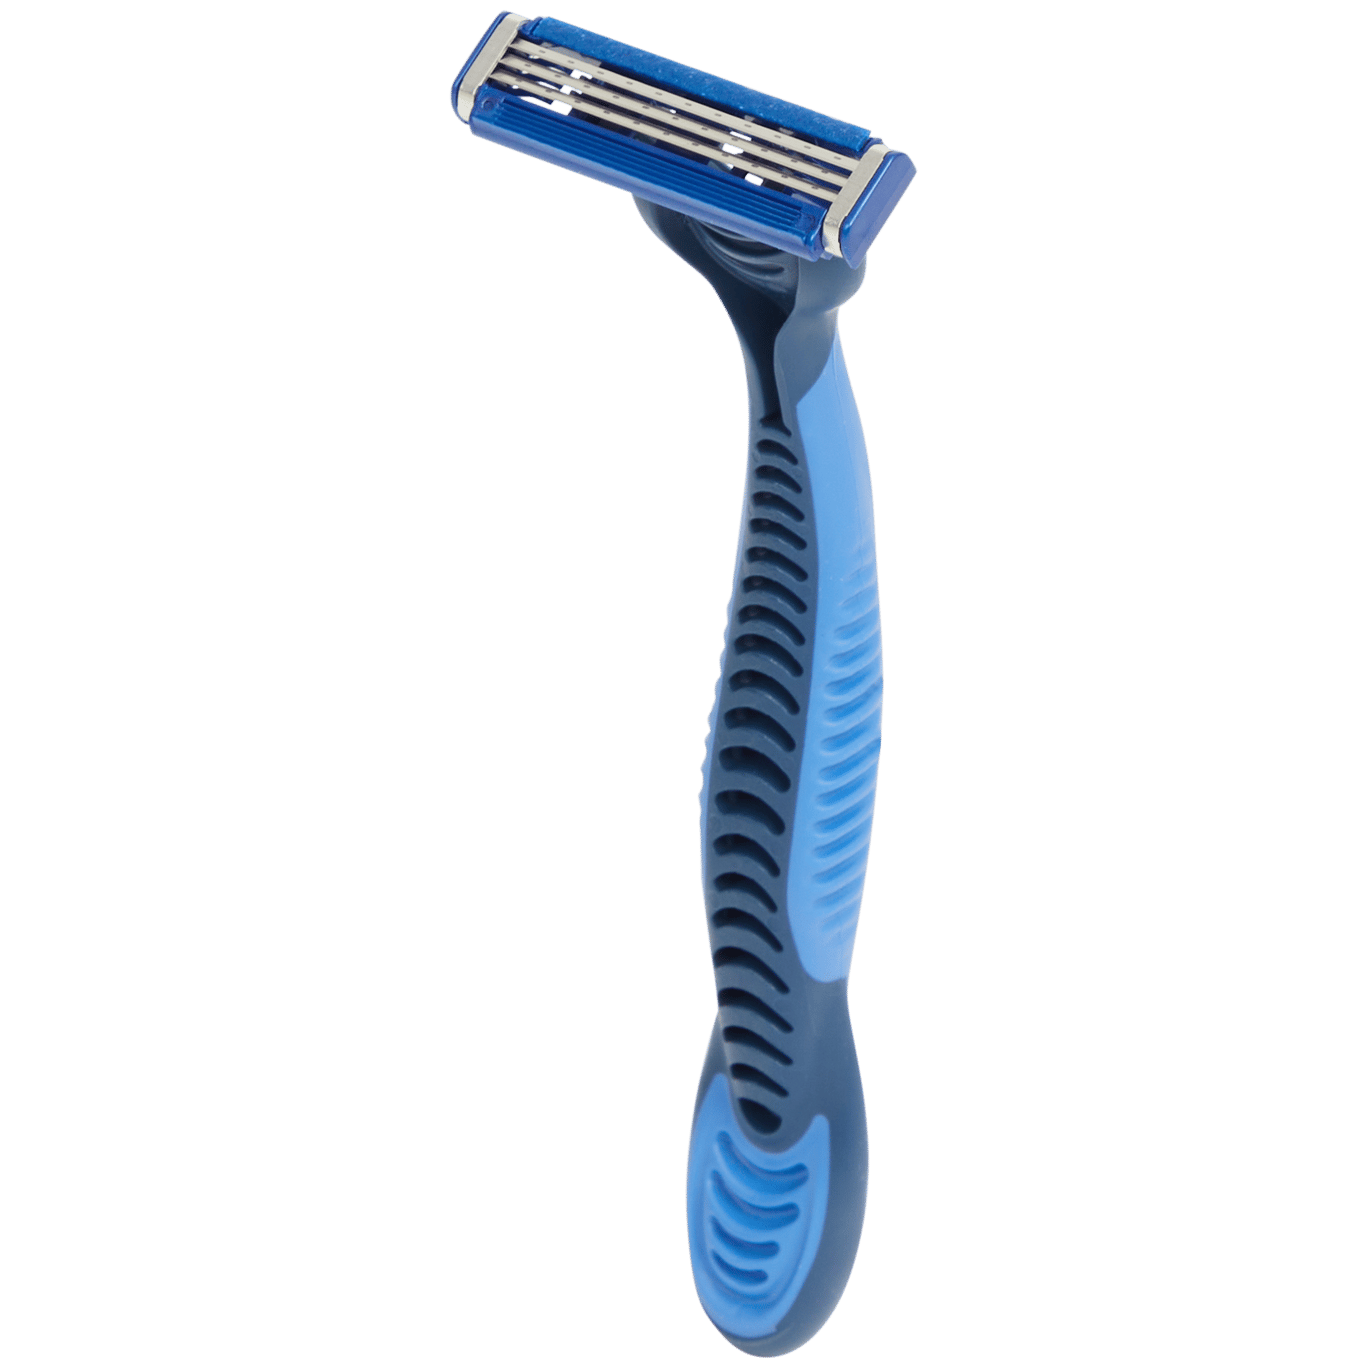 Lâminas de barbear Gillette Sensor 3 Comfort